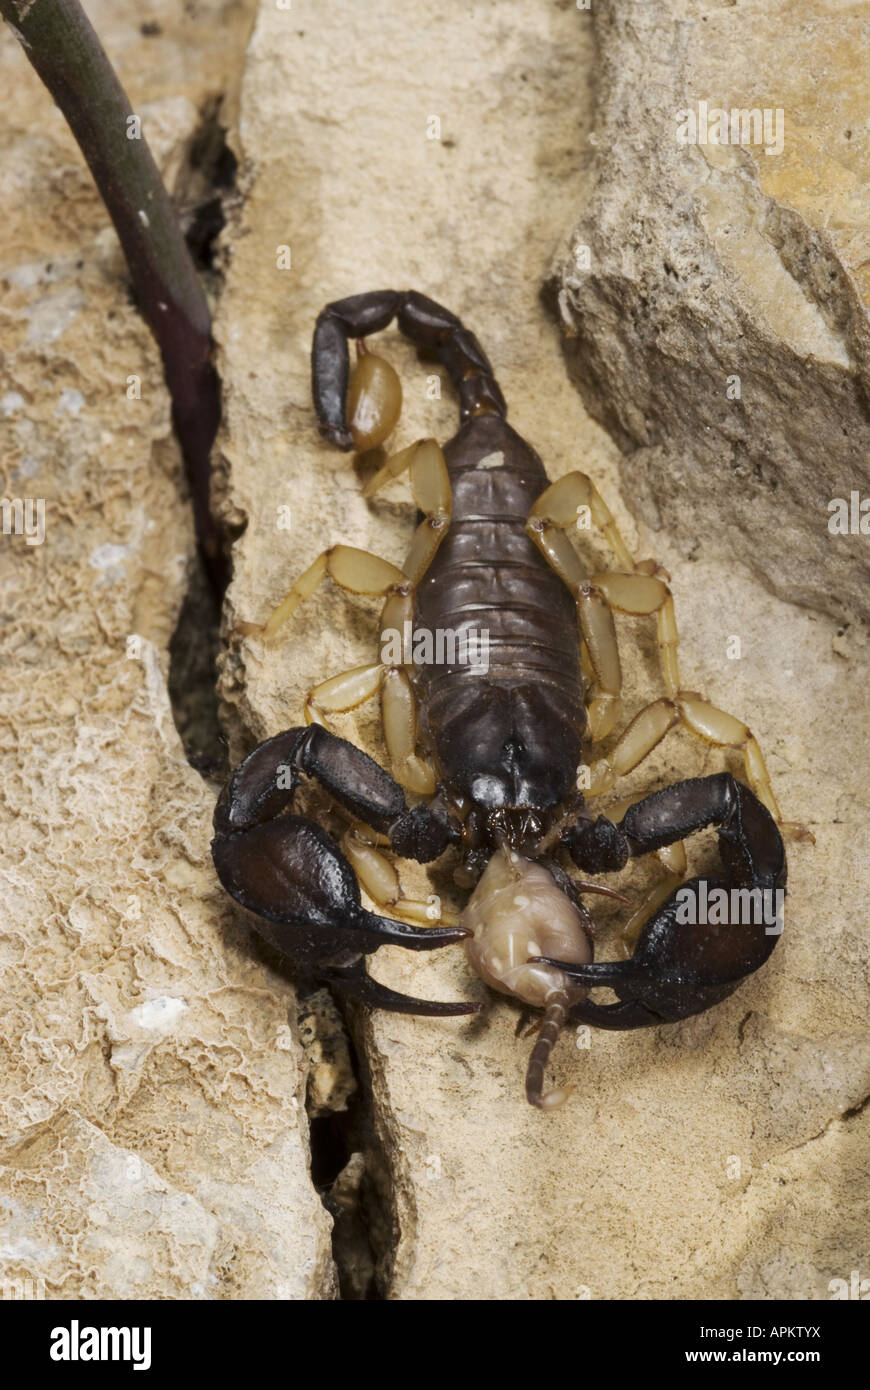 Italian scorpion (Euscorpius italicus), scorpion feeds other smaller scorpion, Greece, Peloponnes, Messinien, Pylos Stock Photo